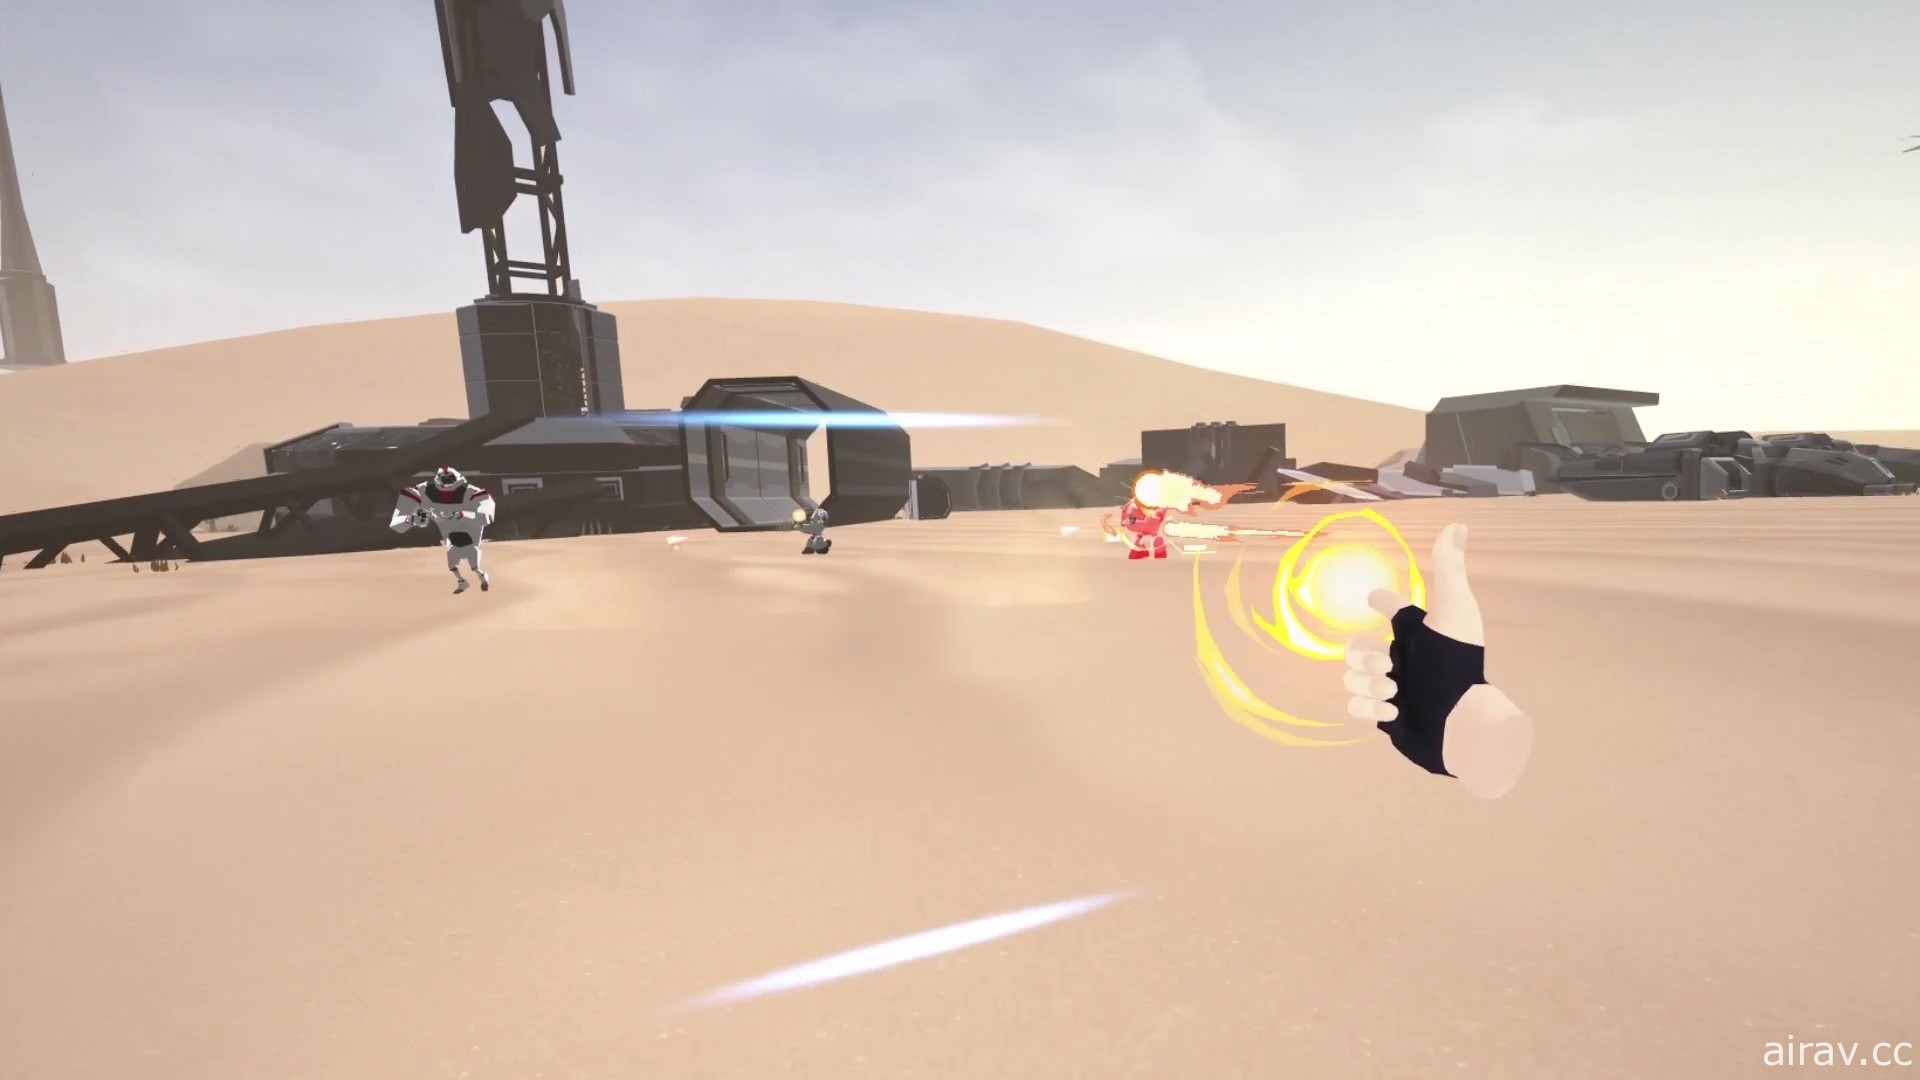 【TpGS 22】機甲科幻 VR 動作射擊遊戲《星劍特攻》將開放試玩